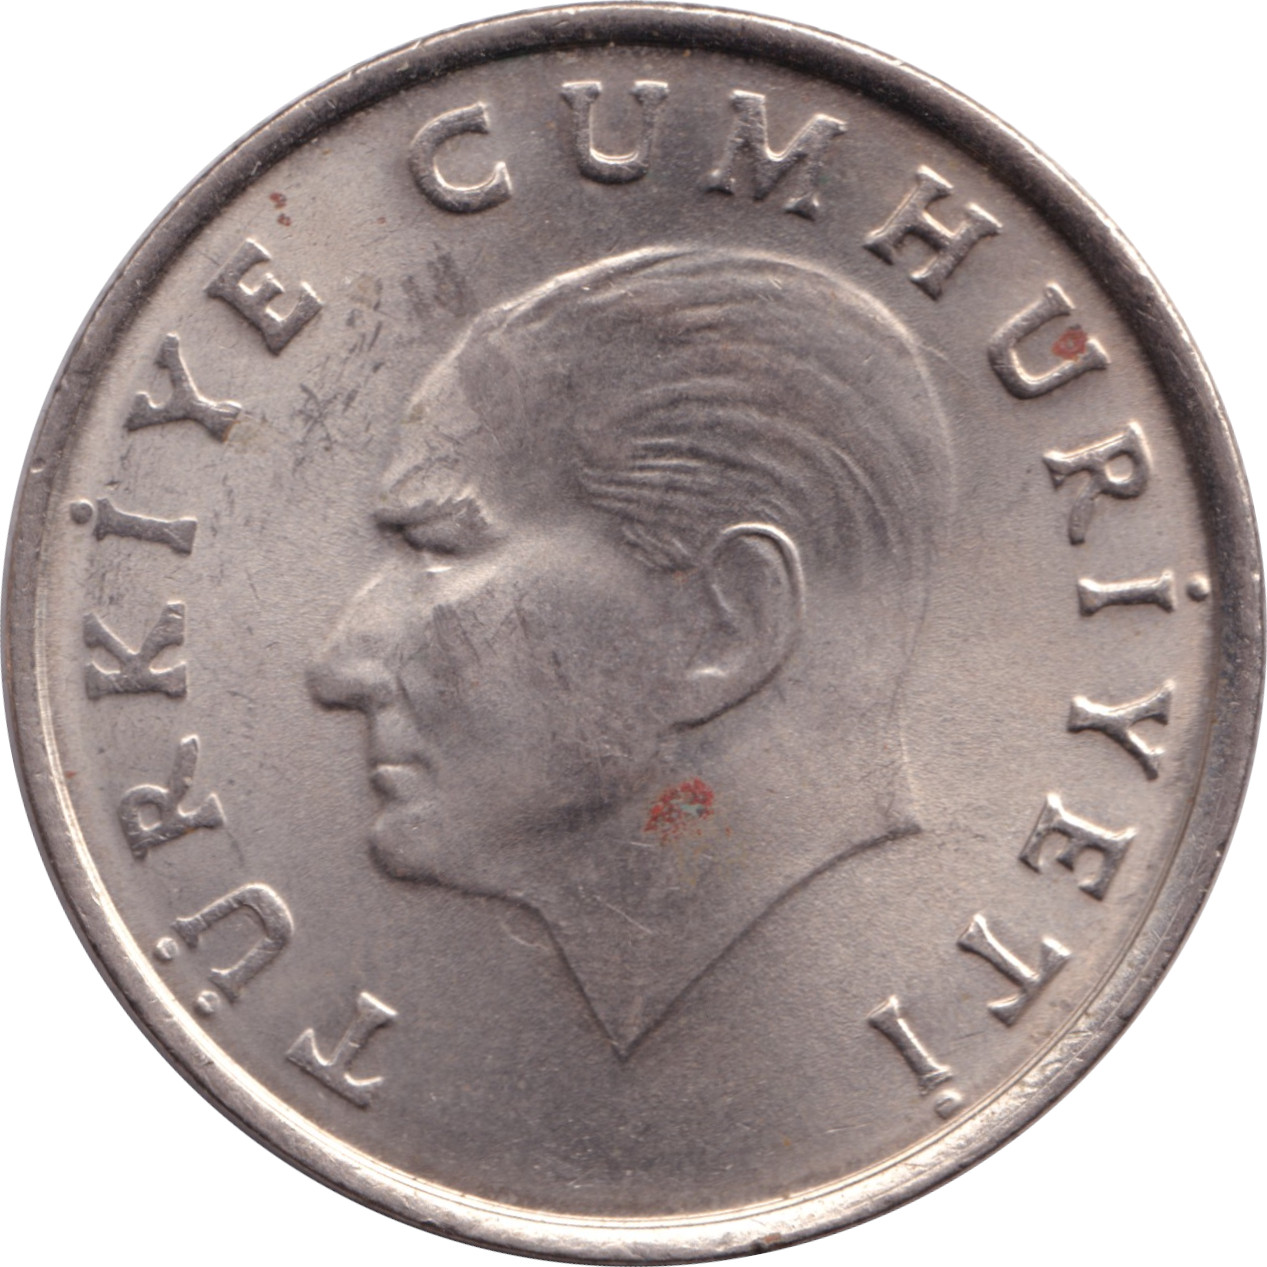 50 lira - Moustafa Kemal - Type 1